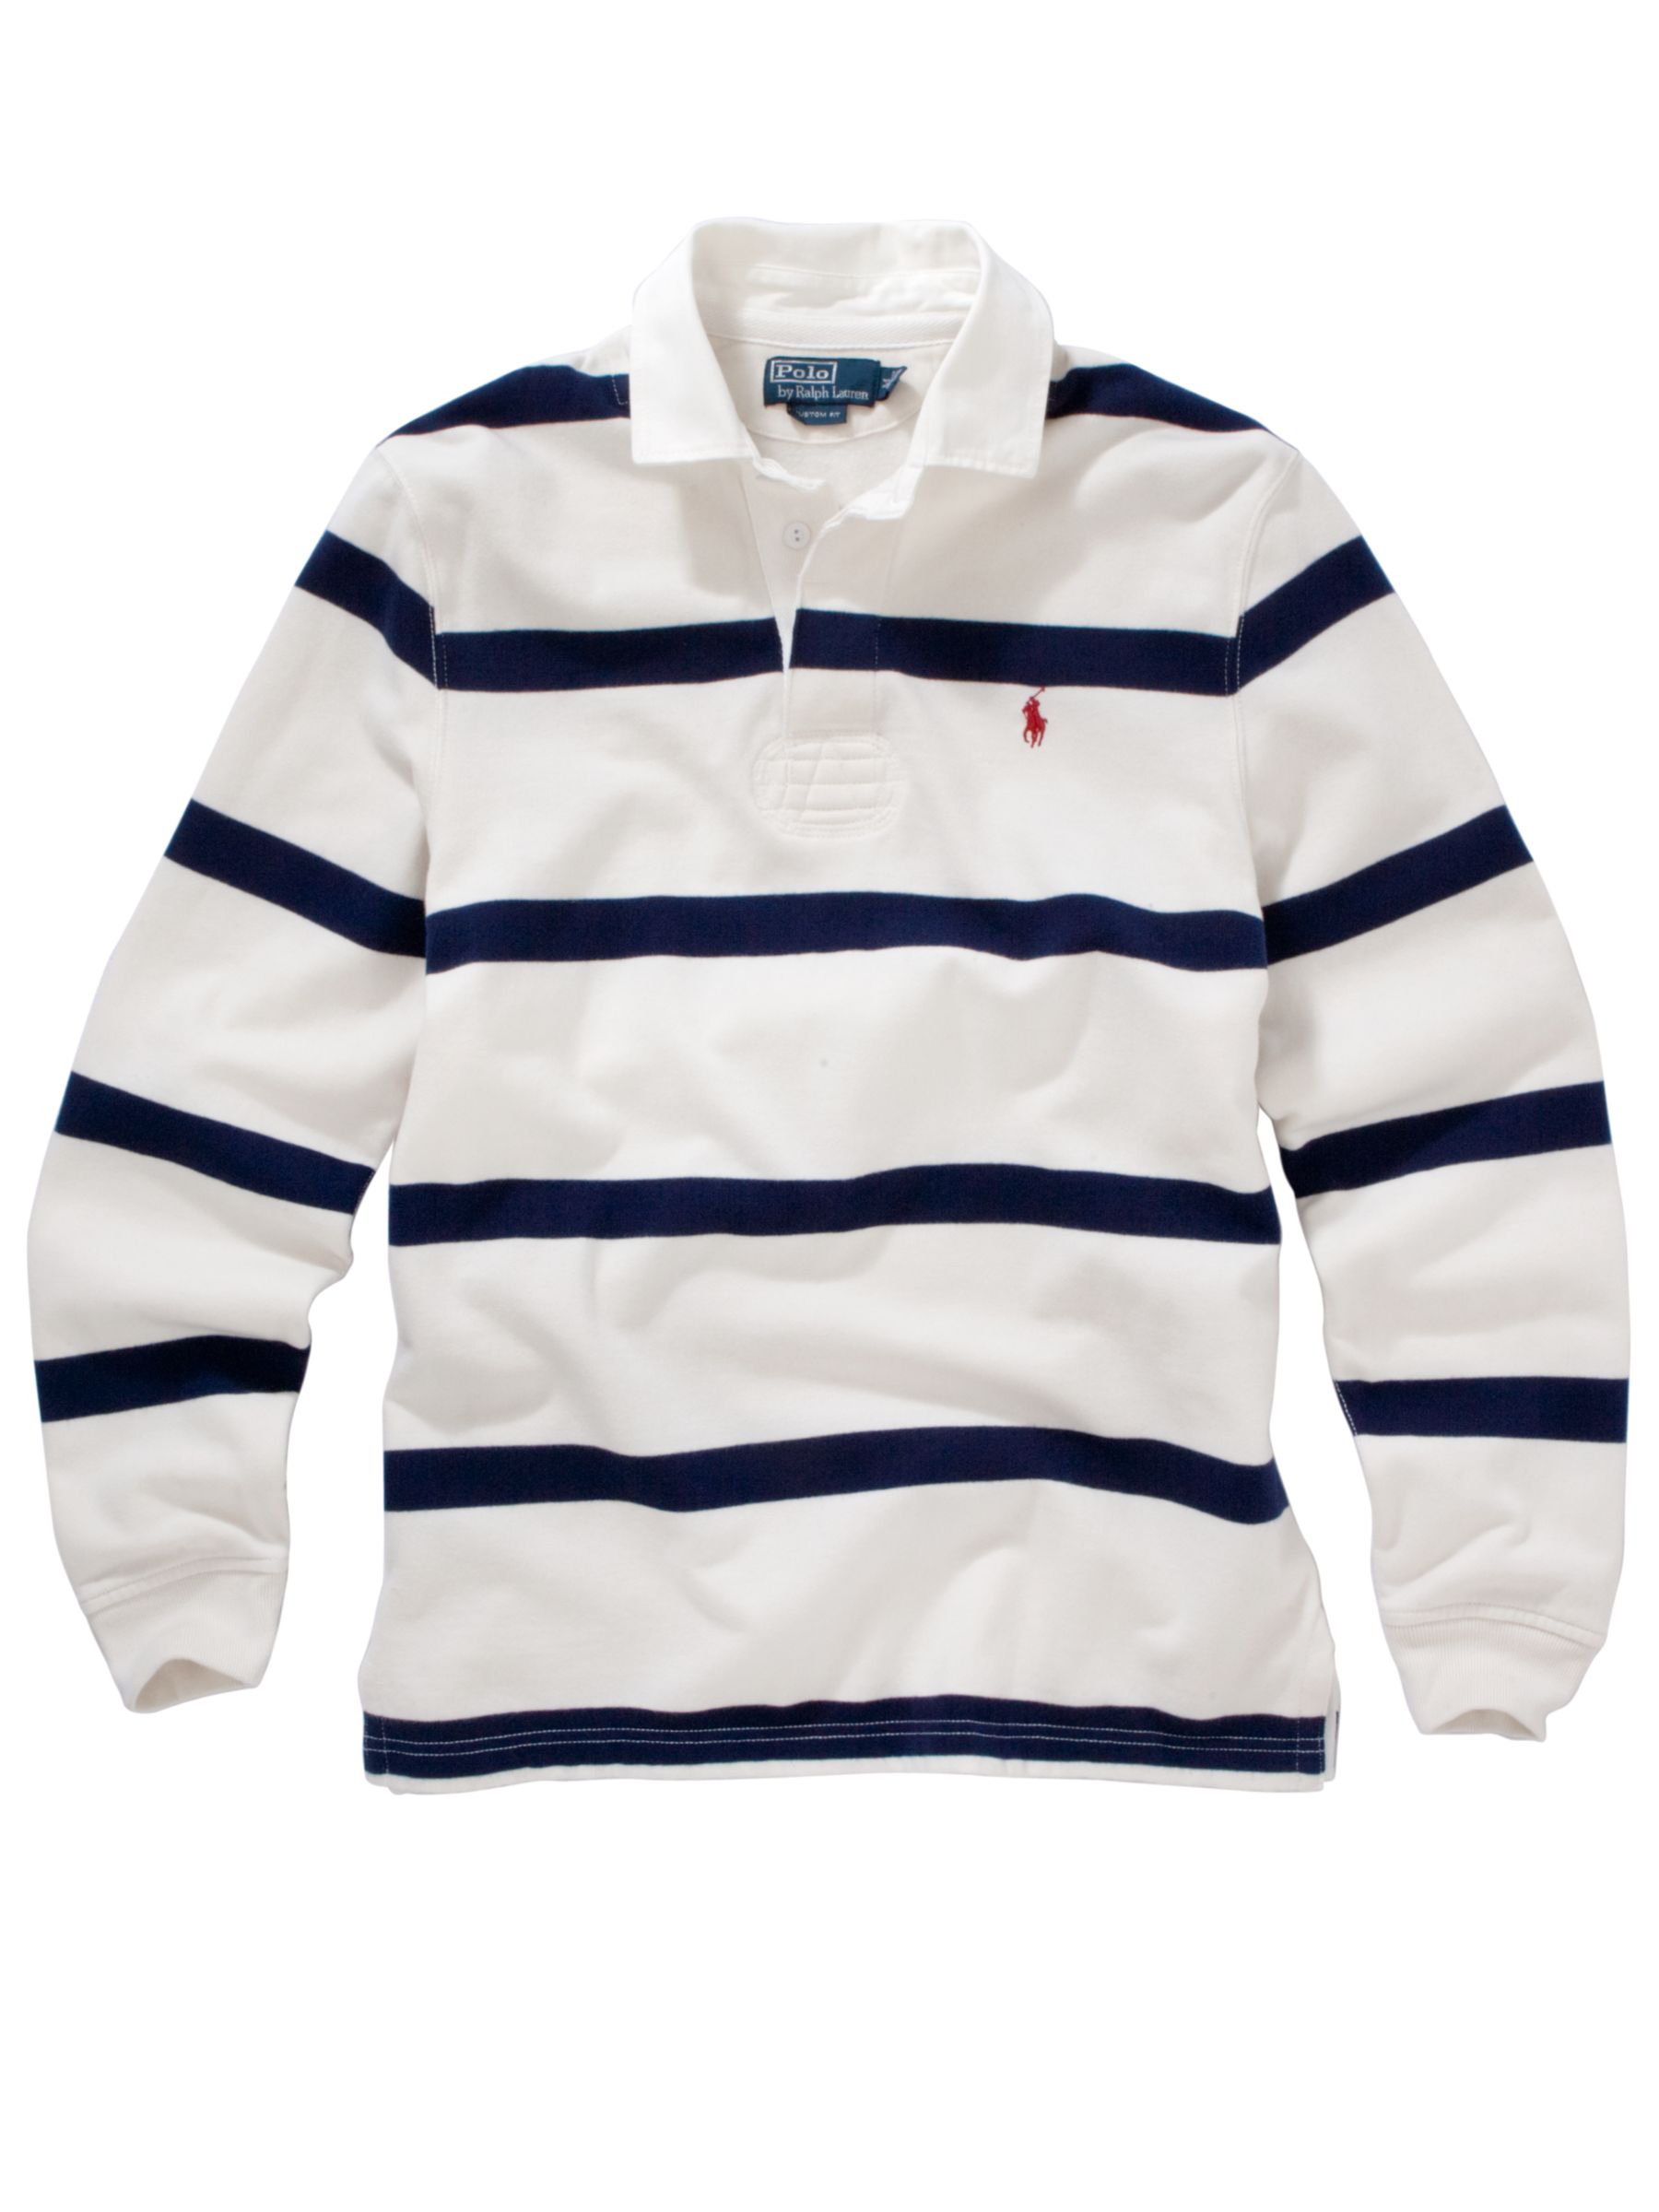 Polo Ralph Lauren Stripe Rugby Shirt, White/navy